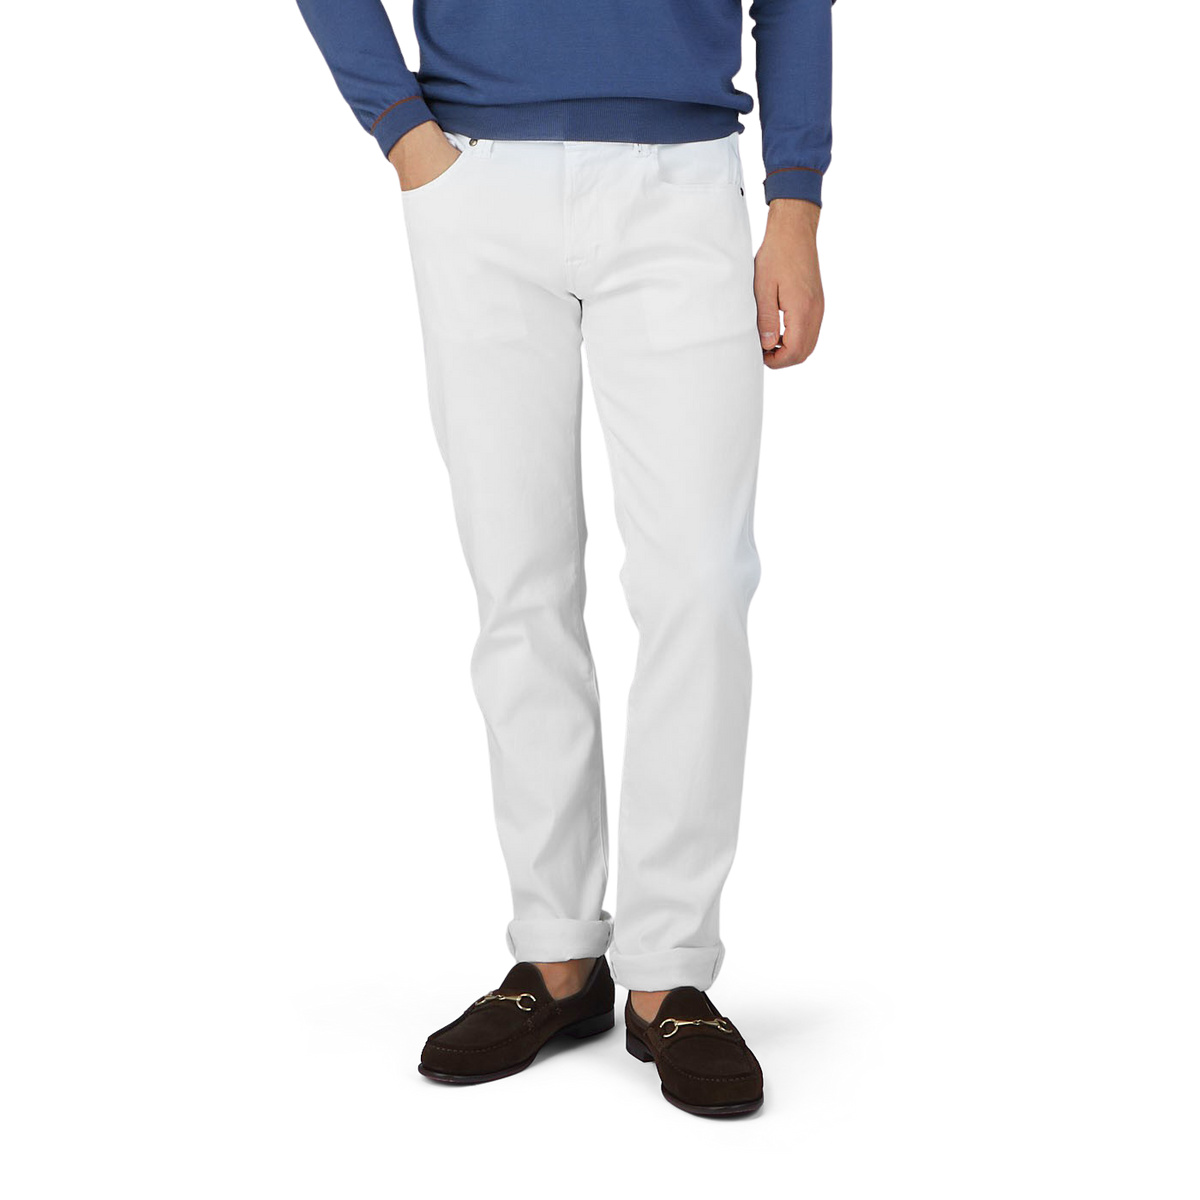 A man in Tramarossa's White Super Stretch Michelangelo Jeans and a blue sweater.